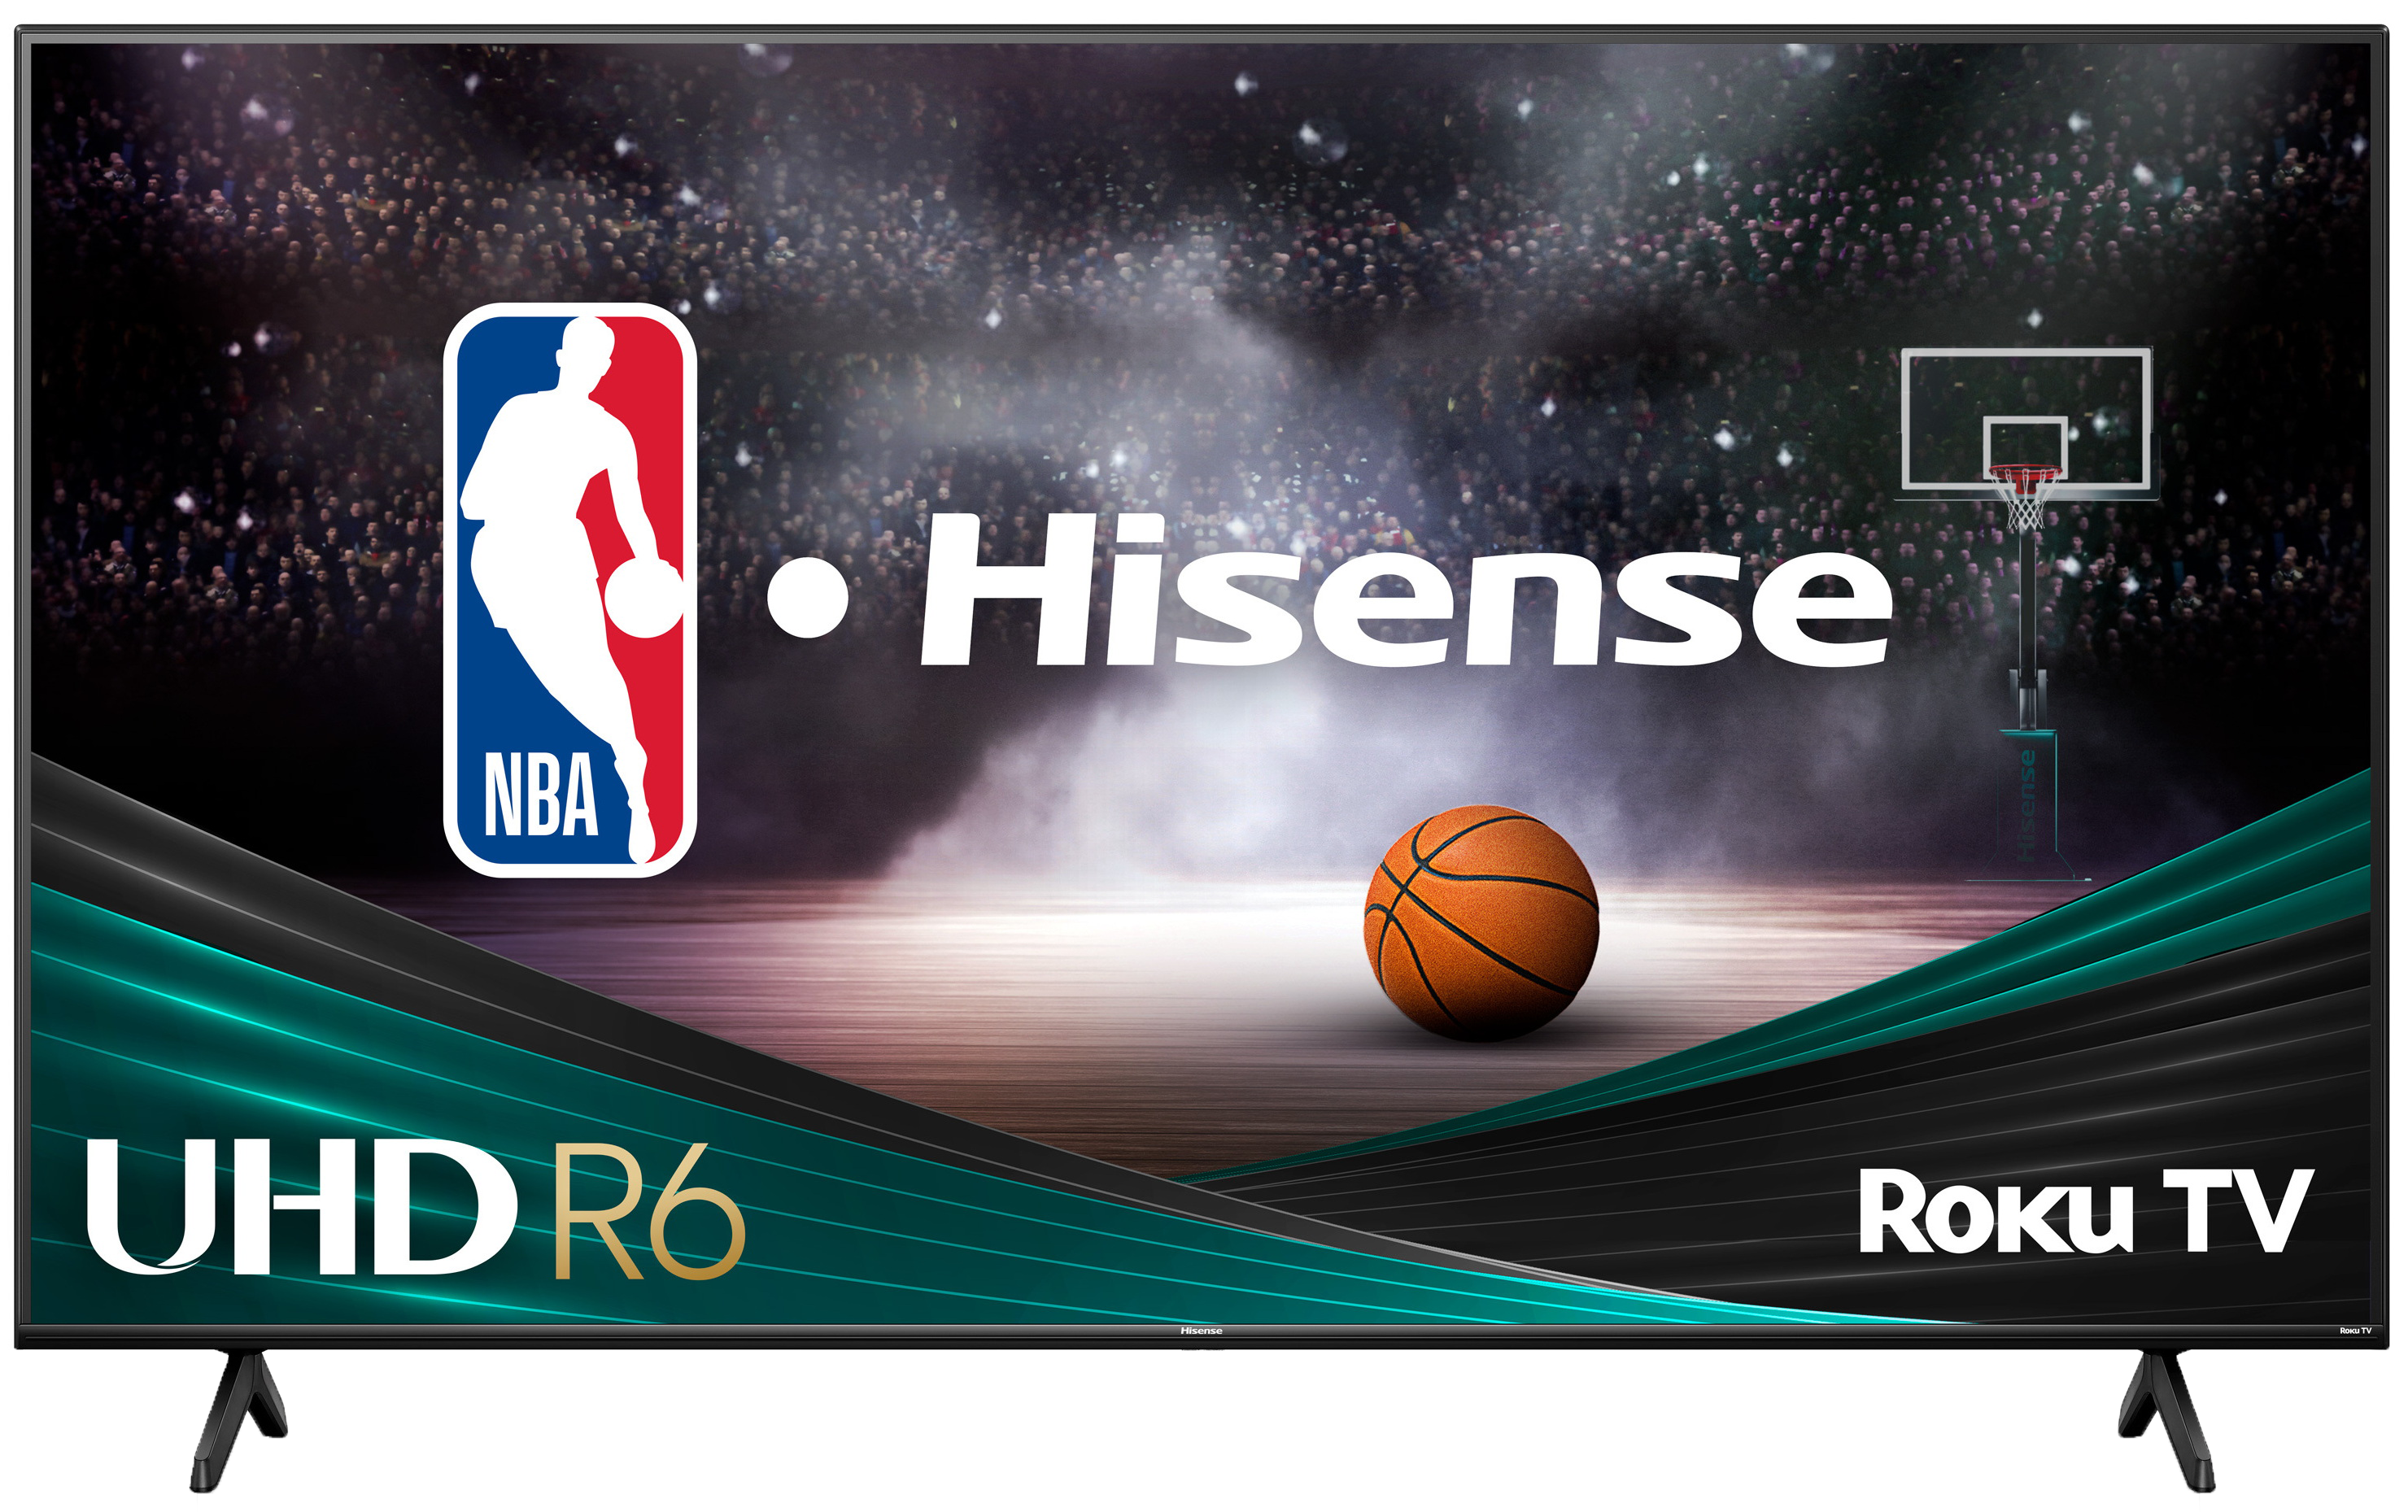 Hisense 65" Class 4K UHD LCD Roku Smart TV HDR R6 Series 65R6E4 - image 1 of 19